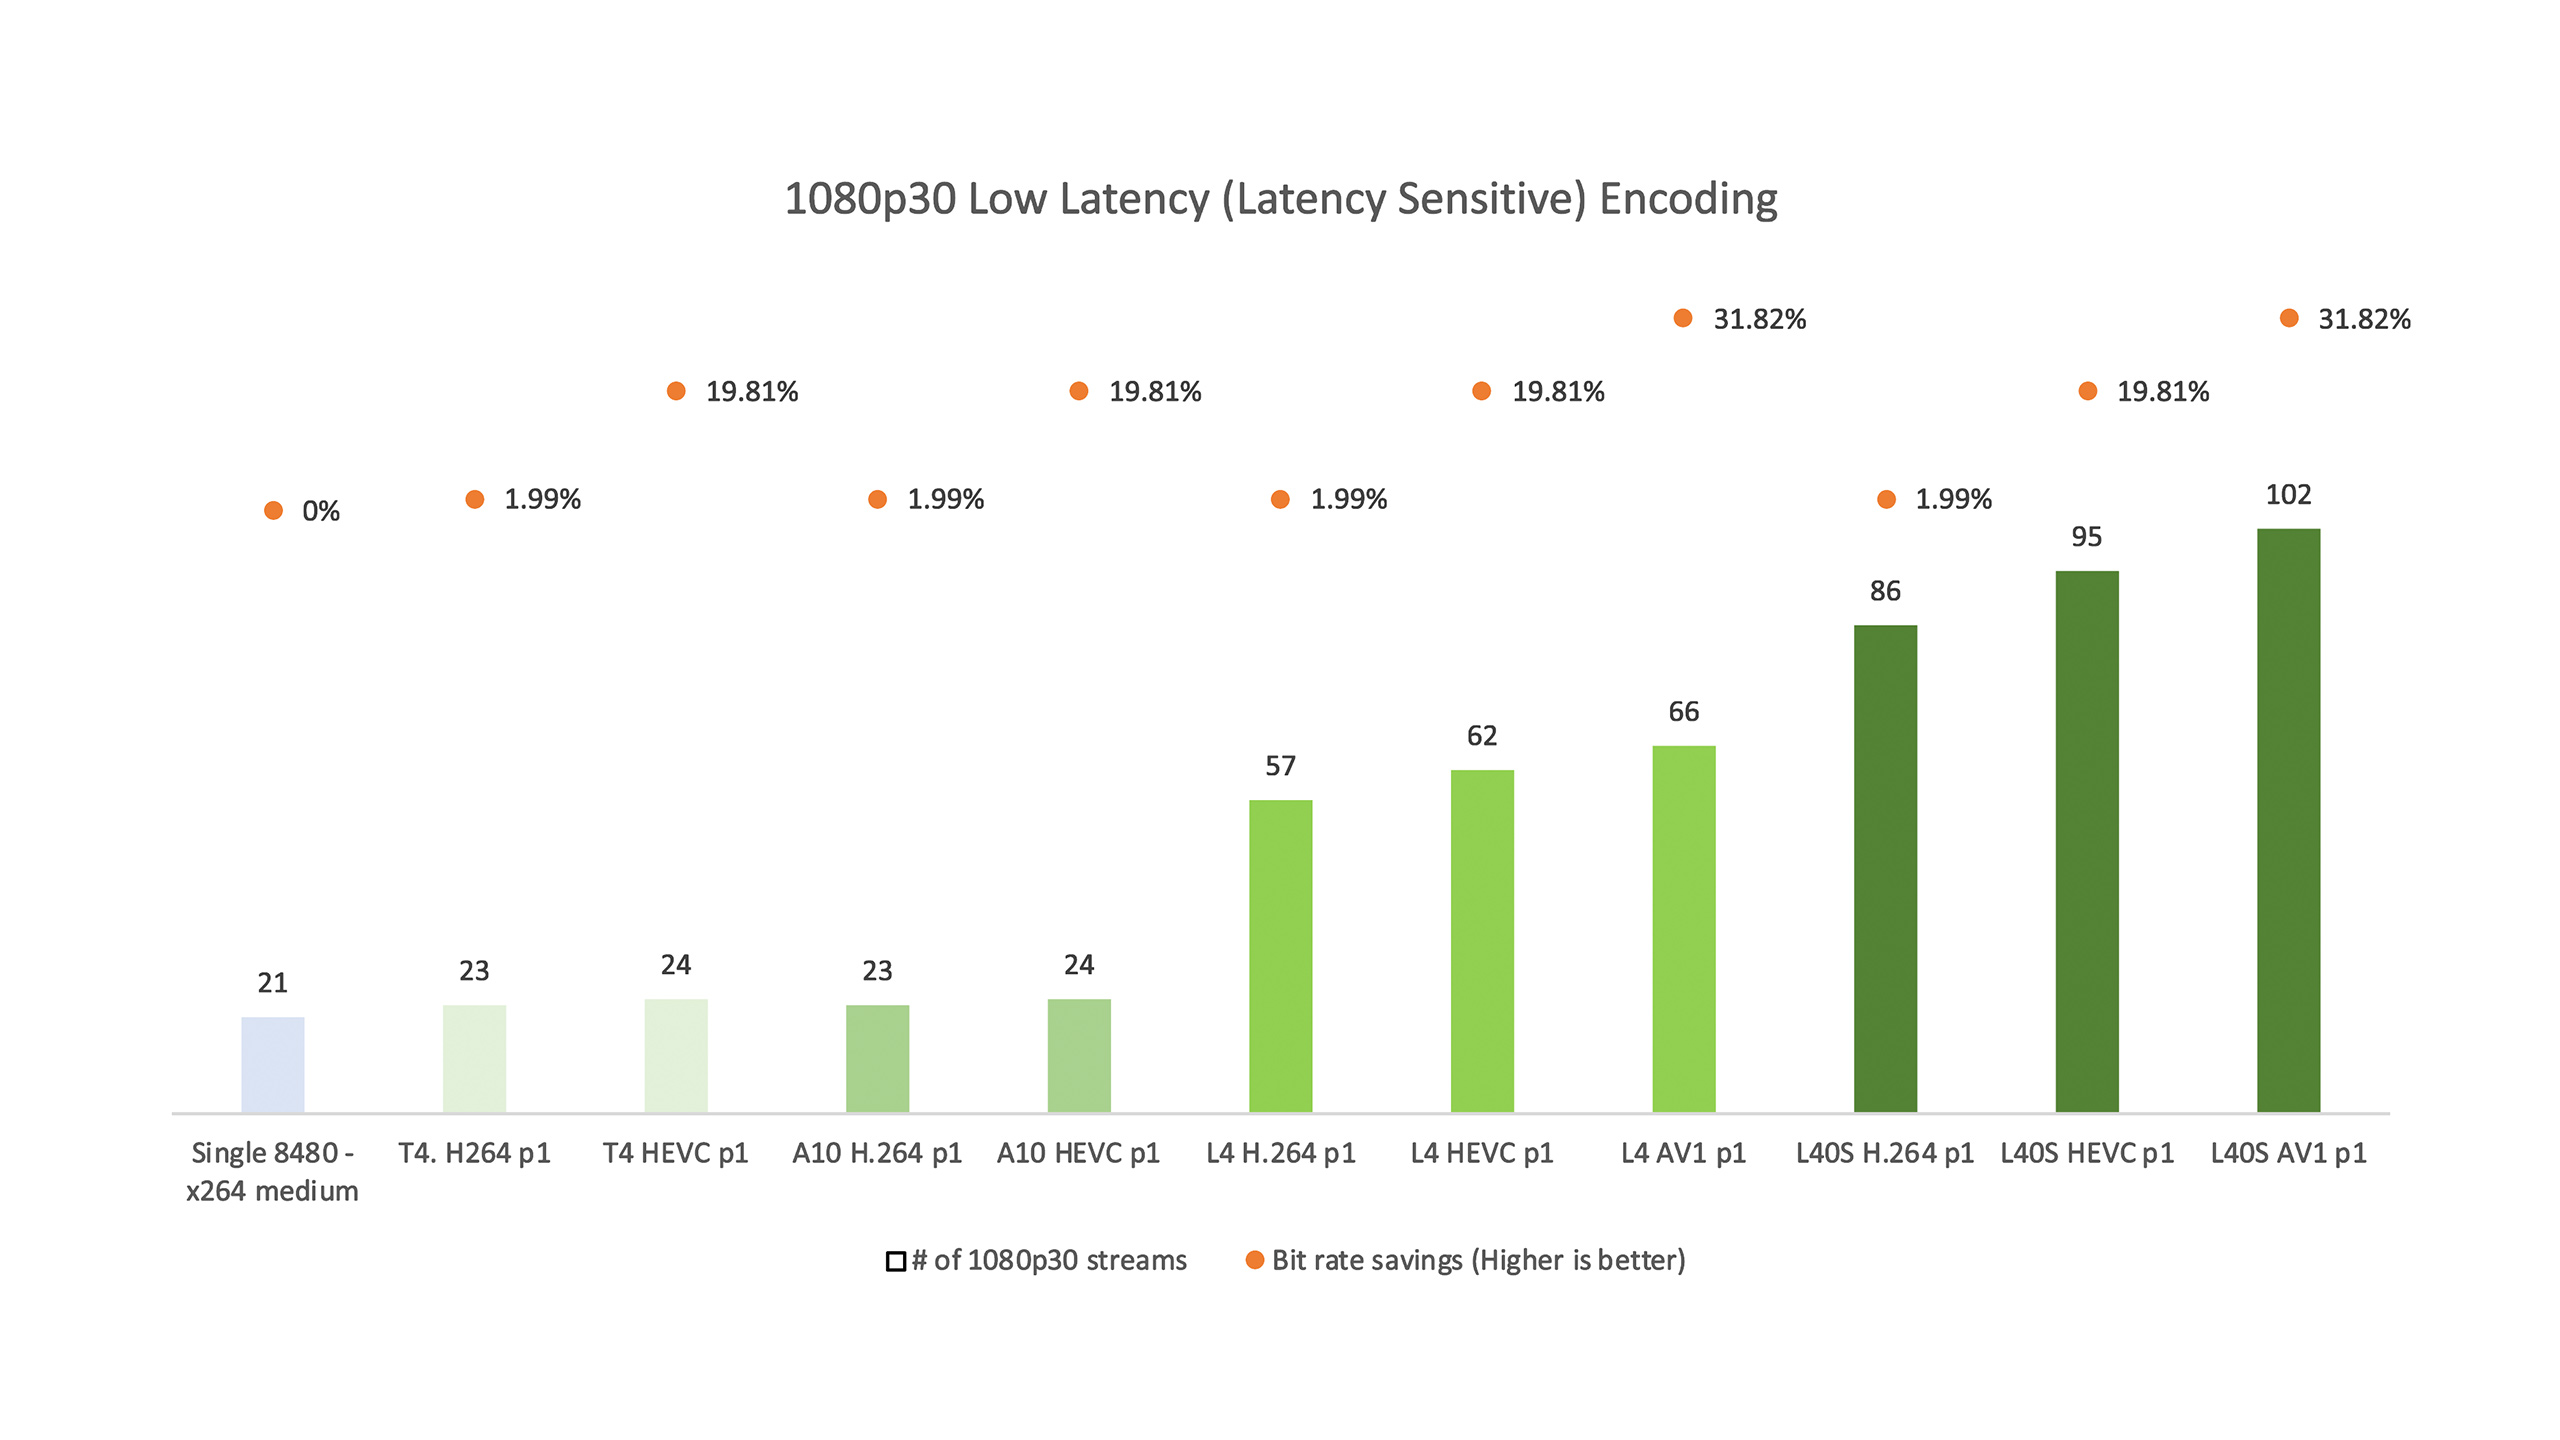 Graph showing 1080p30 low latency encoding